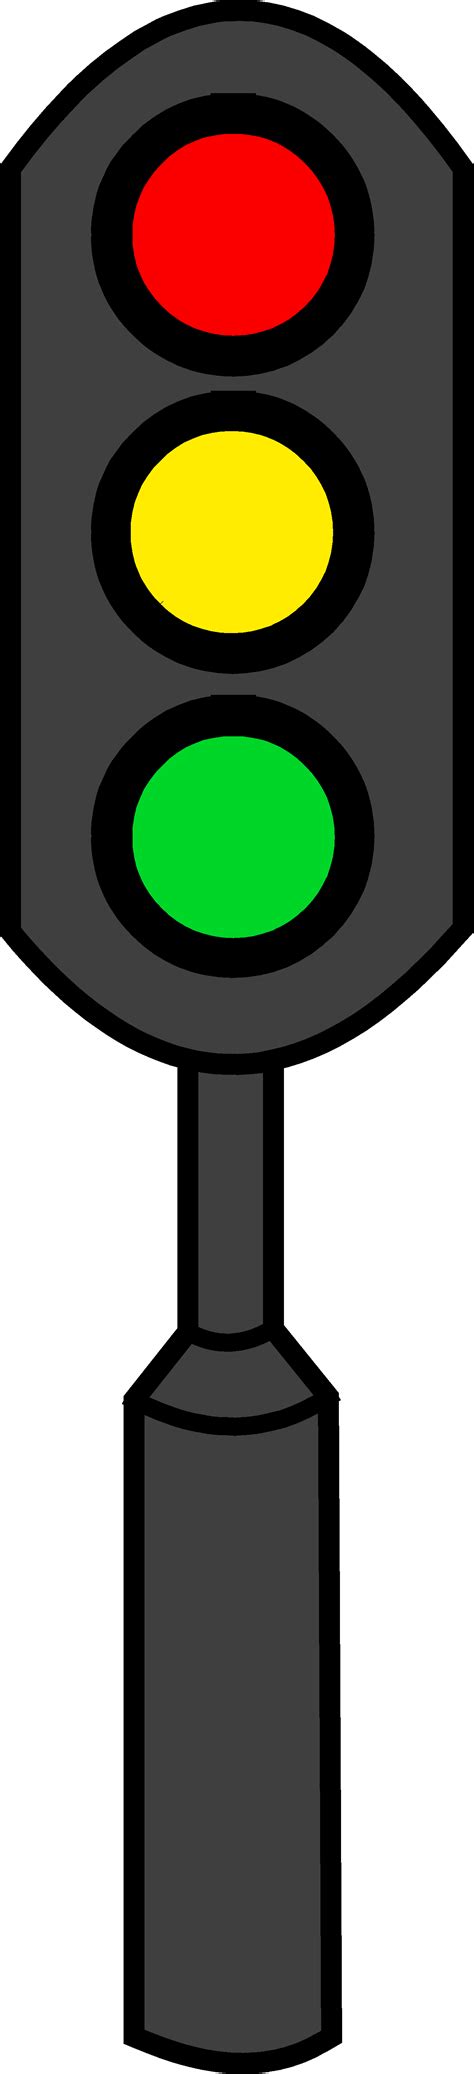 cartoon traffic lights clipart